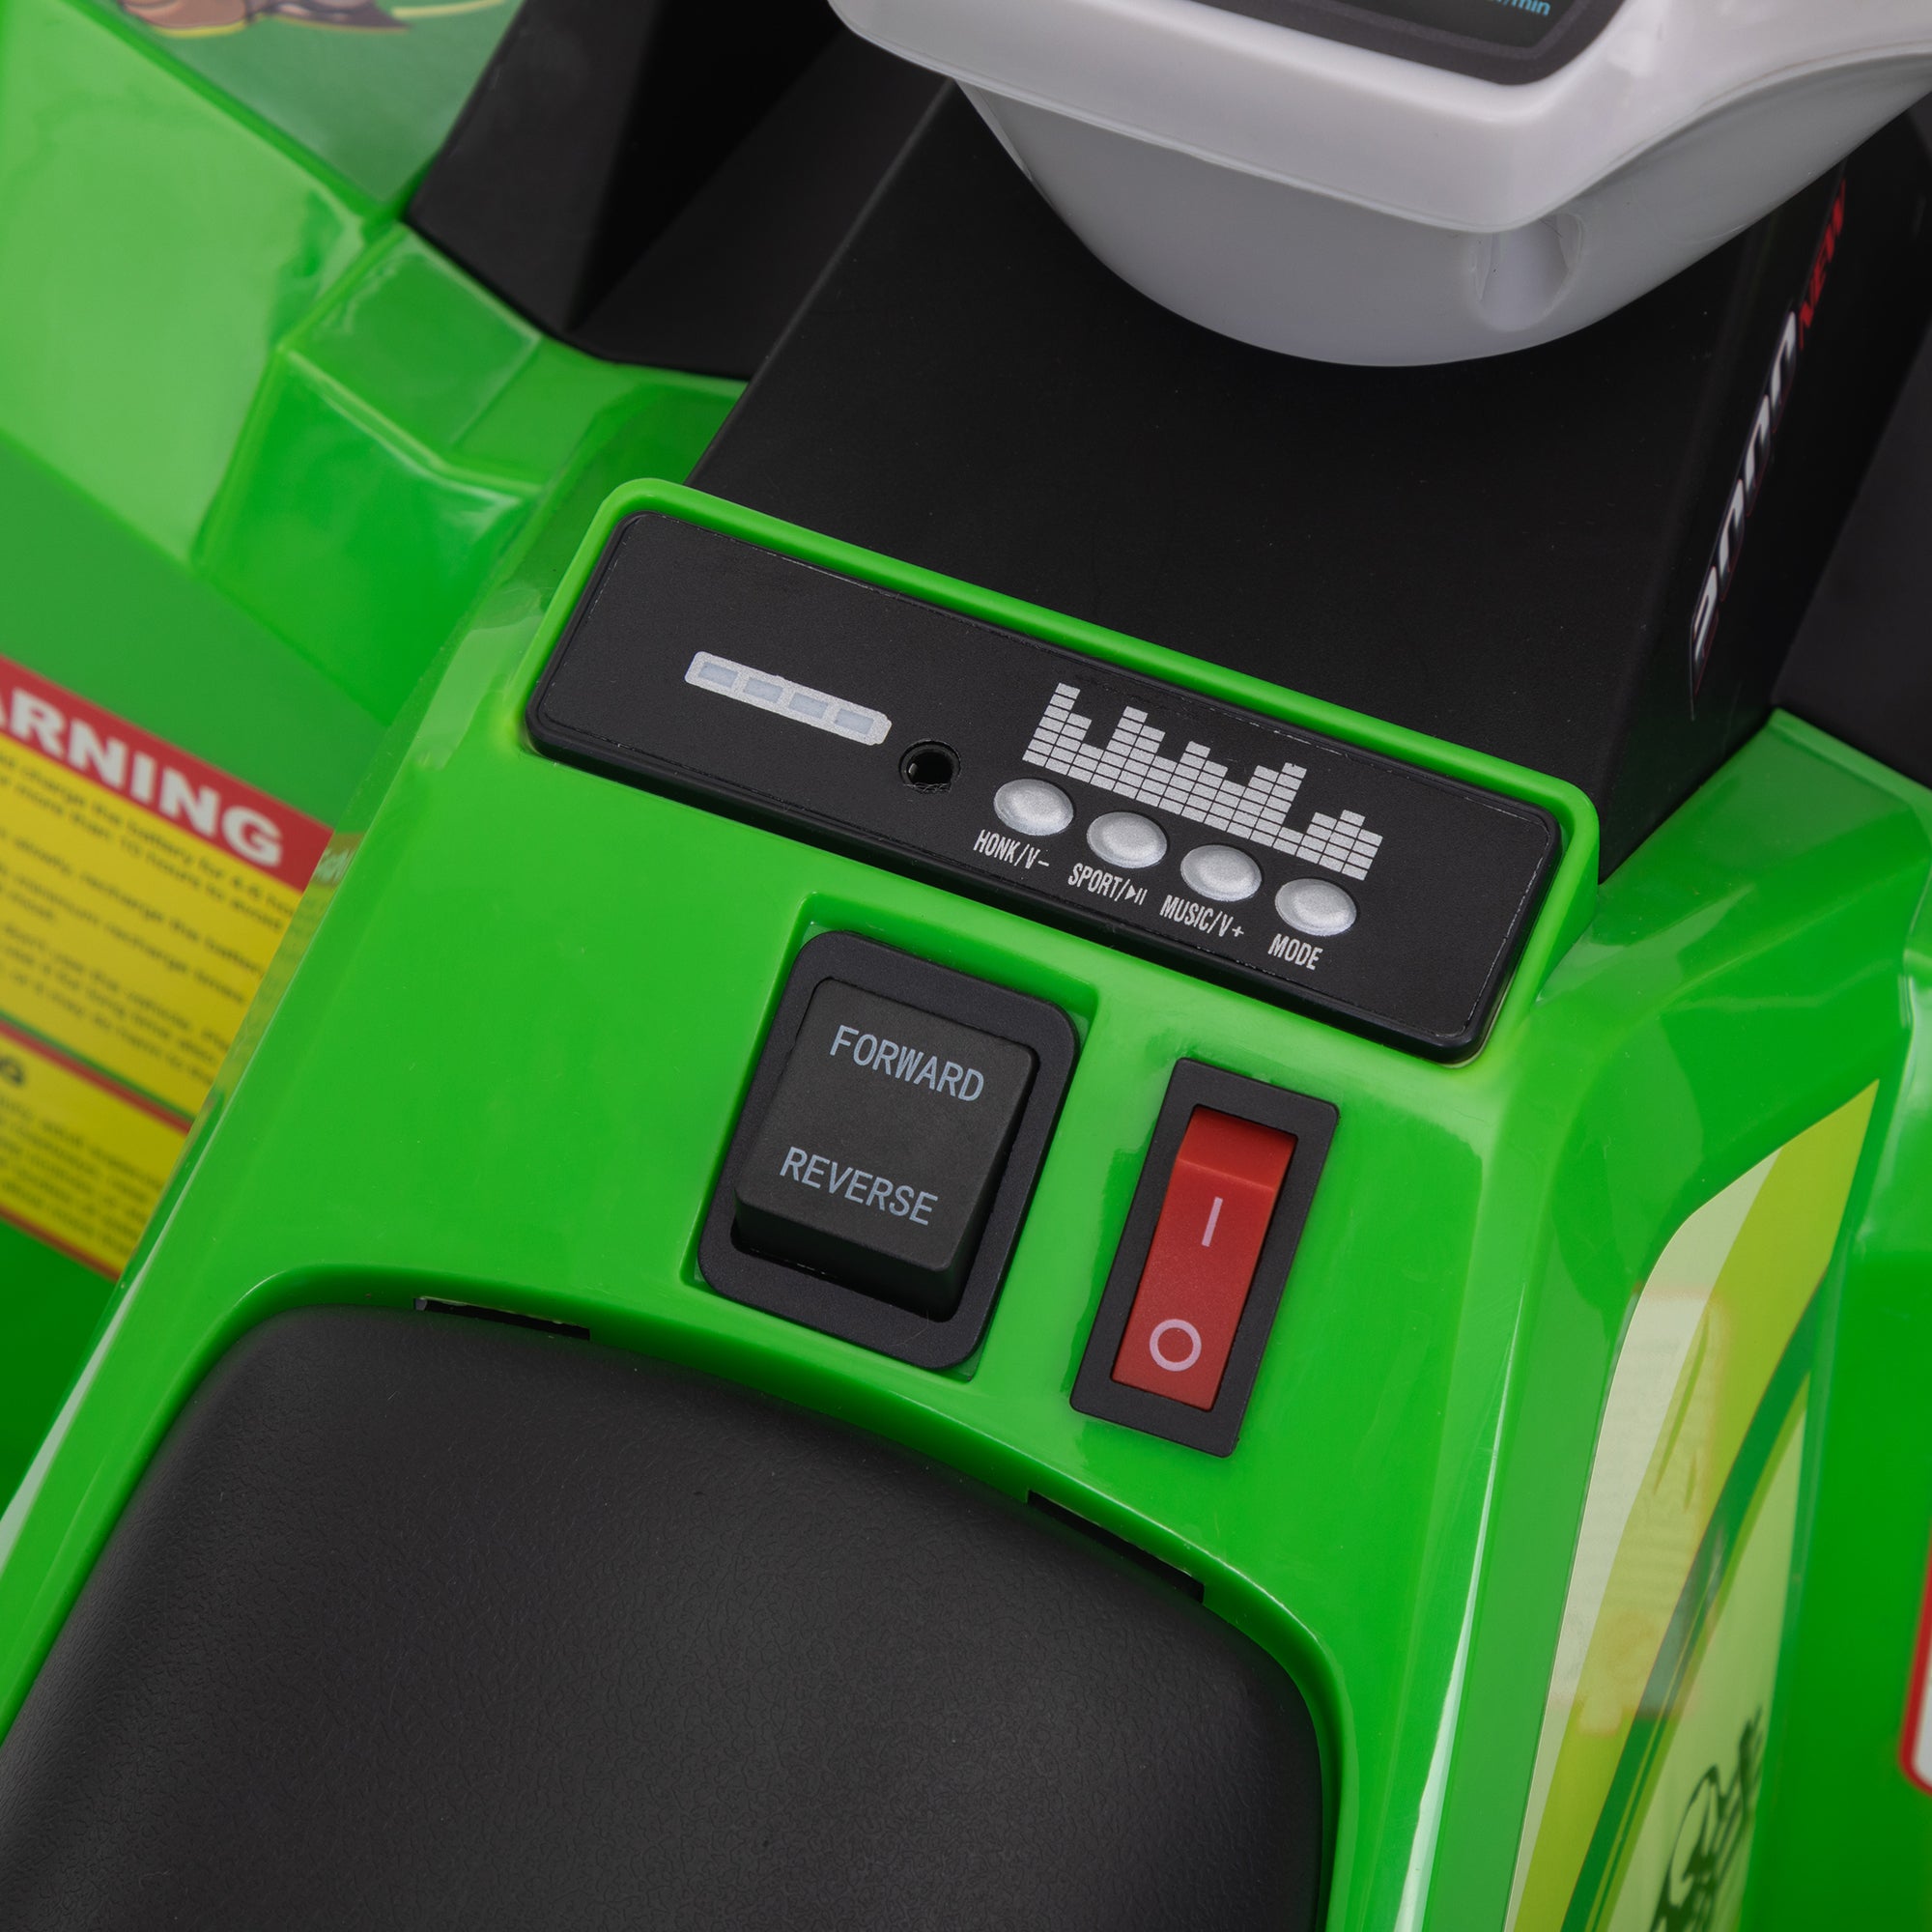 6V Kids Electric ATV, Toddler Ride on Car with green-polypropylene